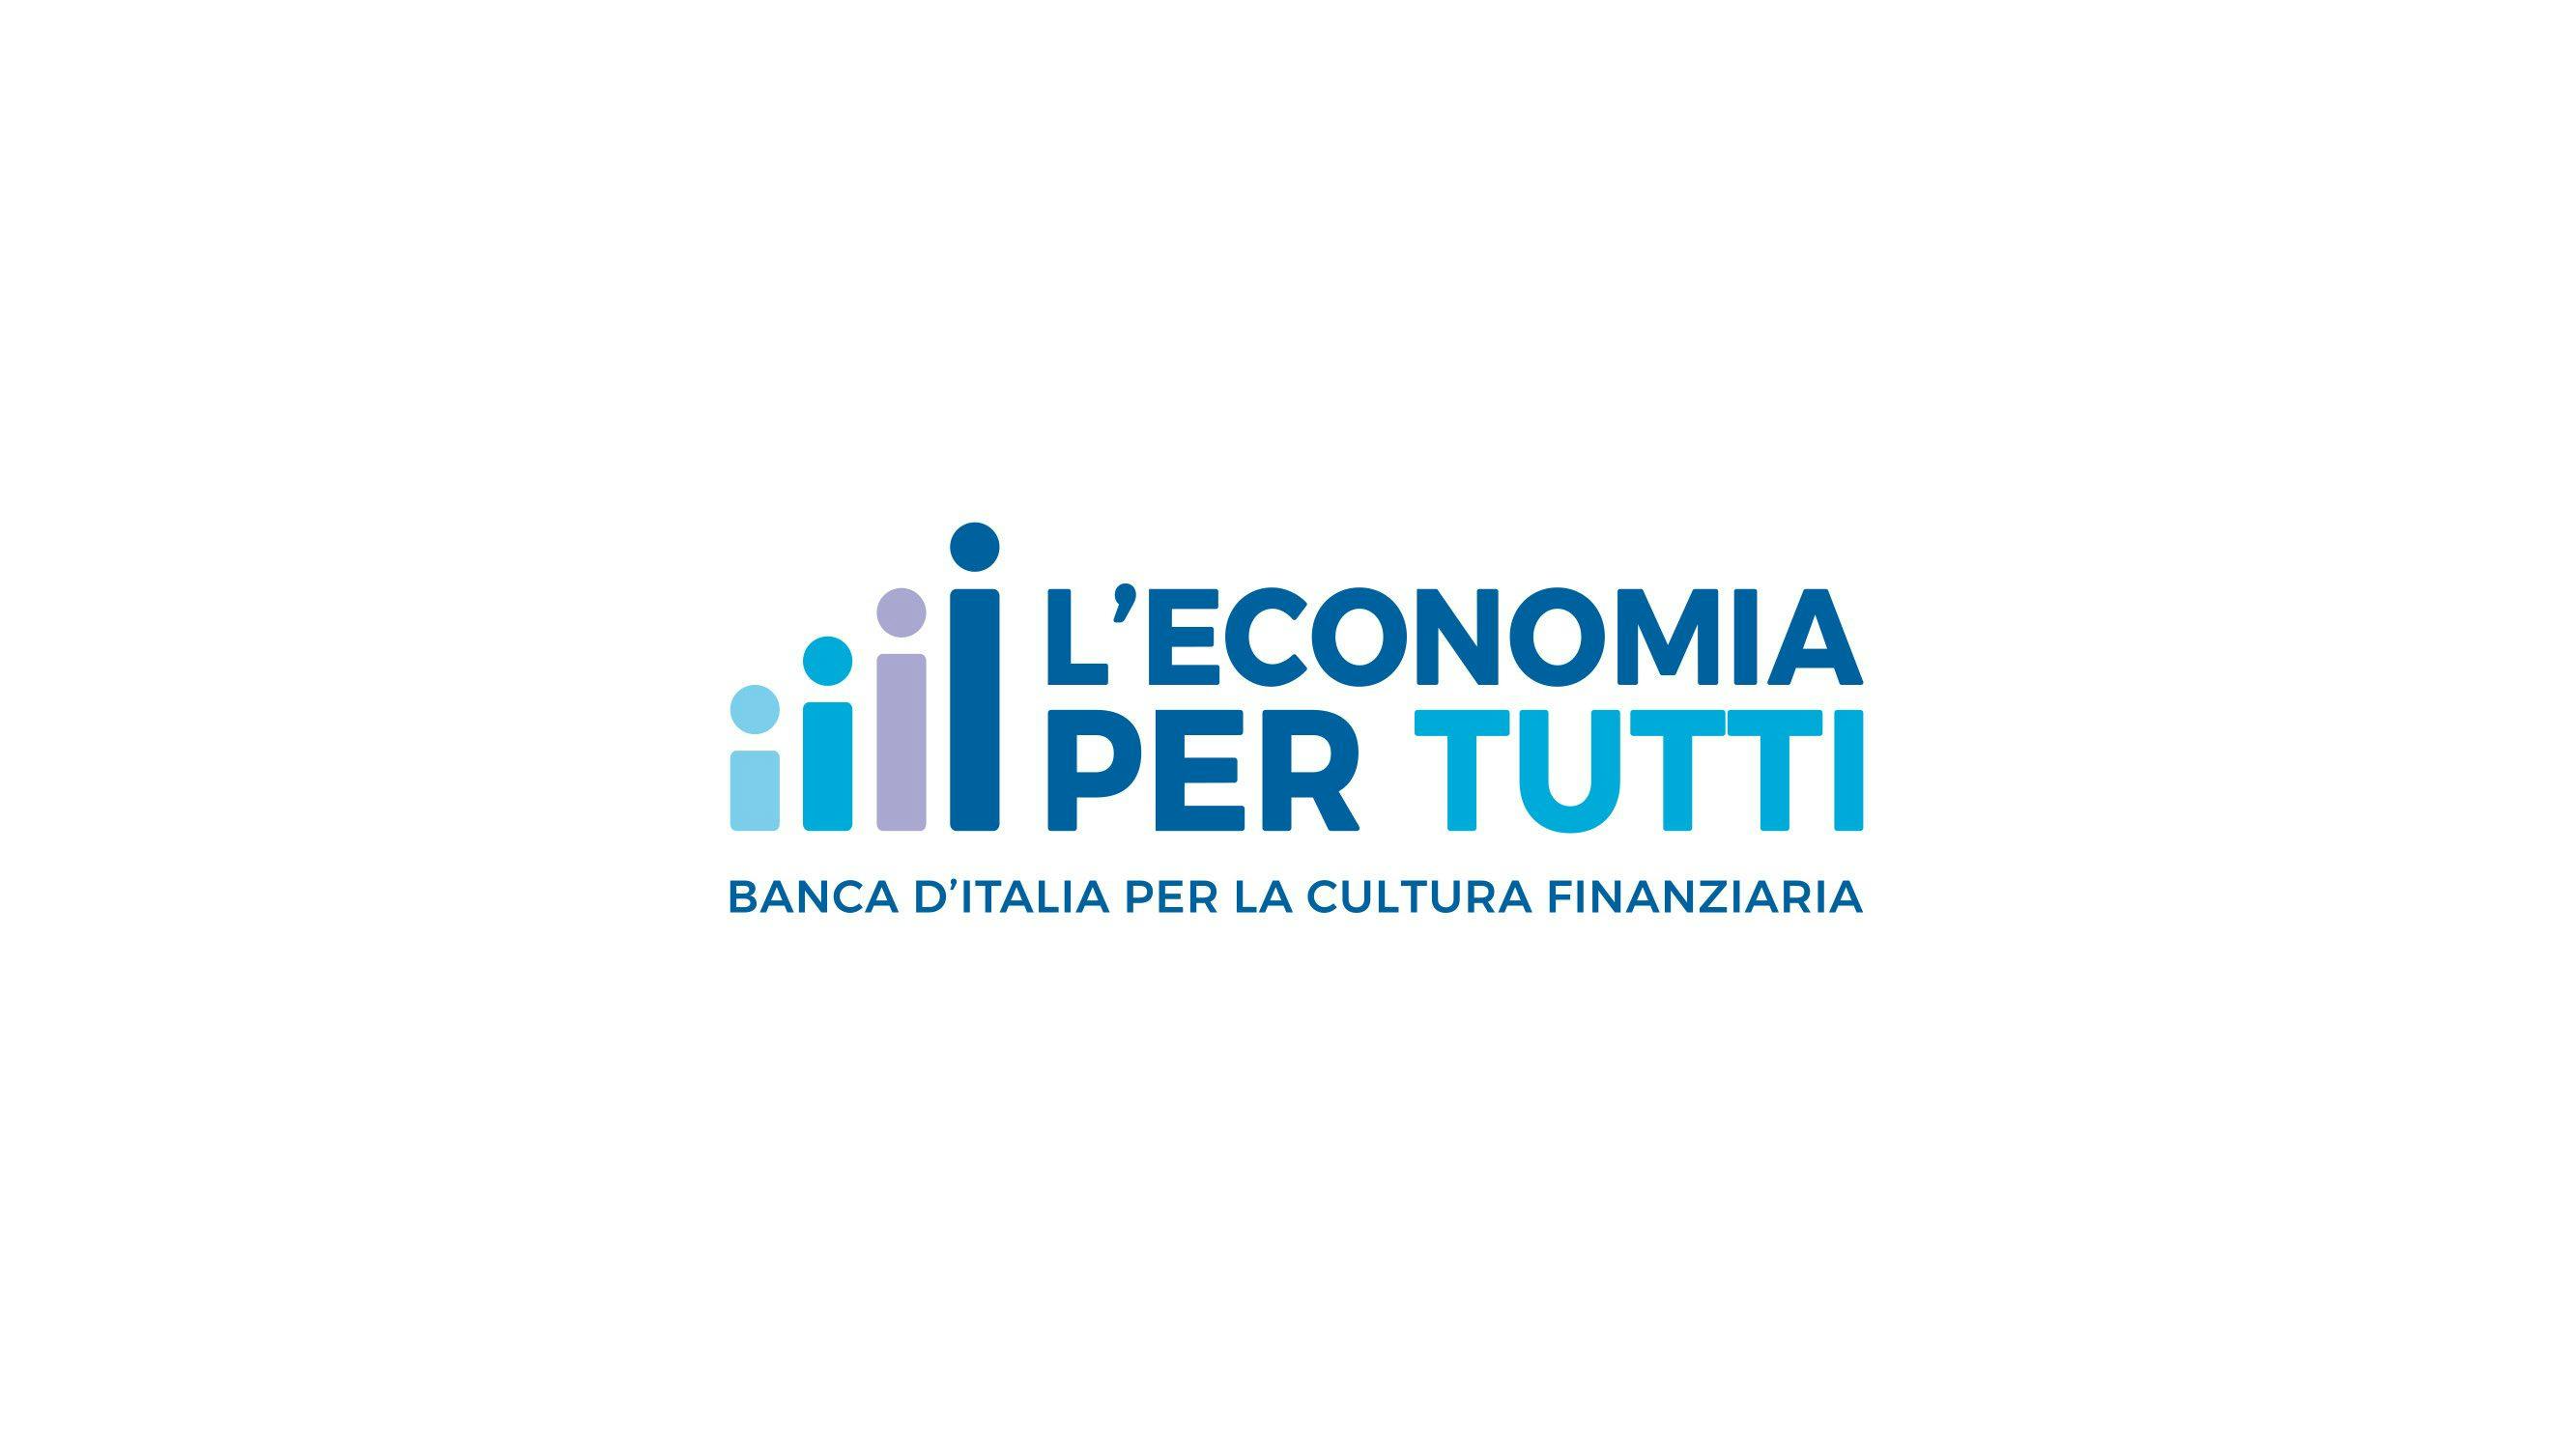 Banca d’Italia per la cultura finanziaria